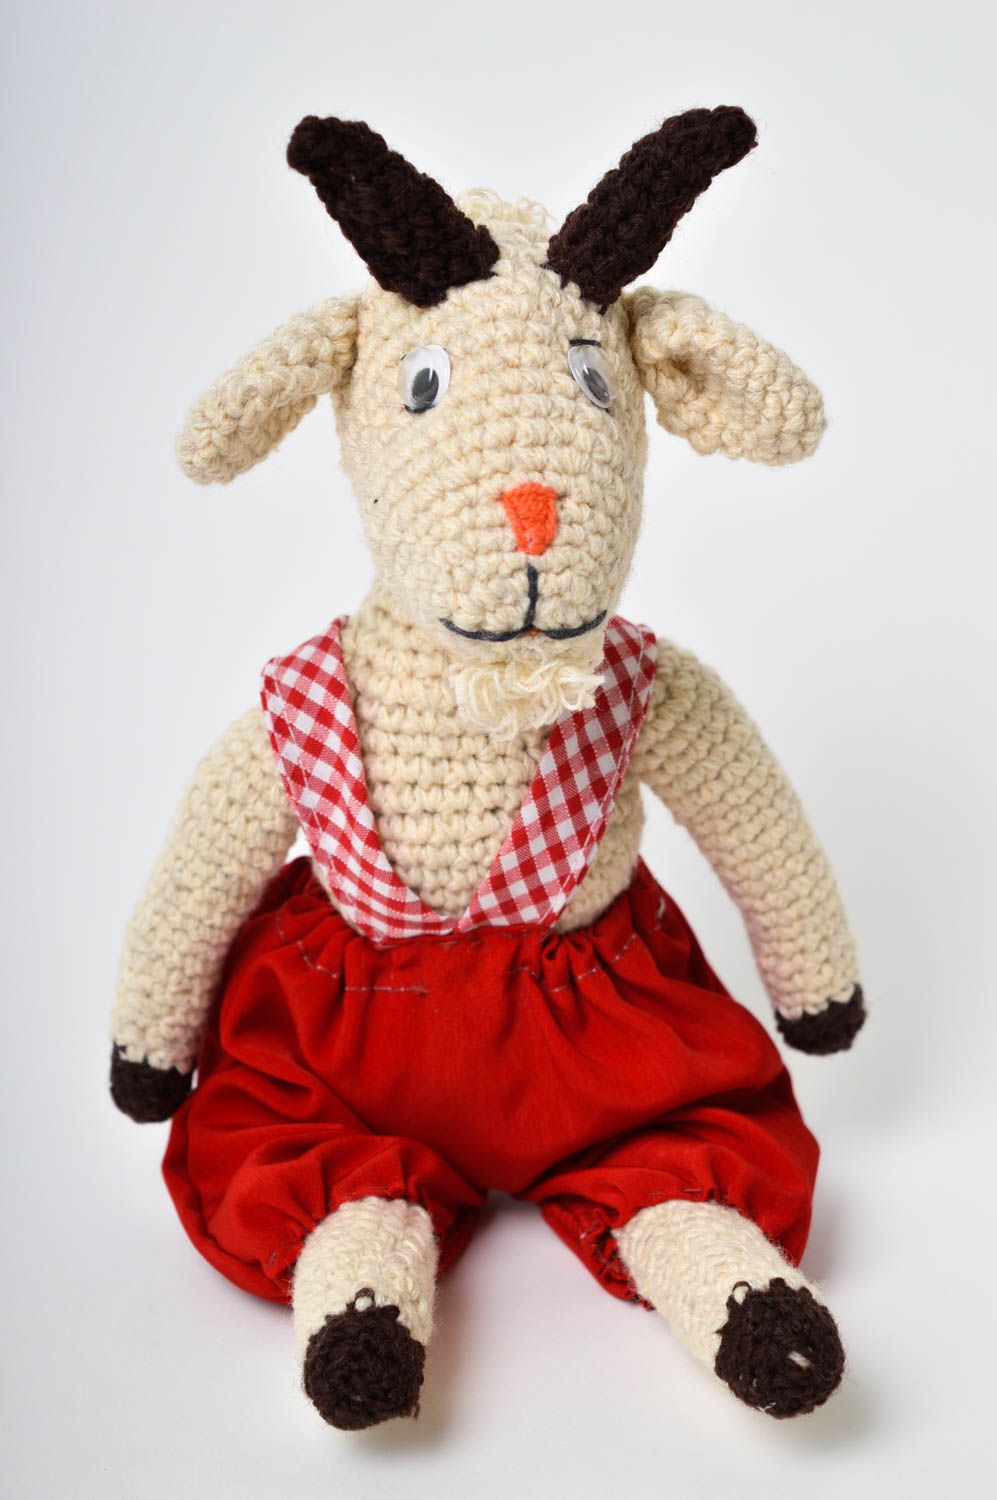 Handmade crocheted toy for babies nursery decor soft toys for children photo 2